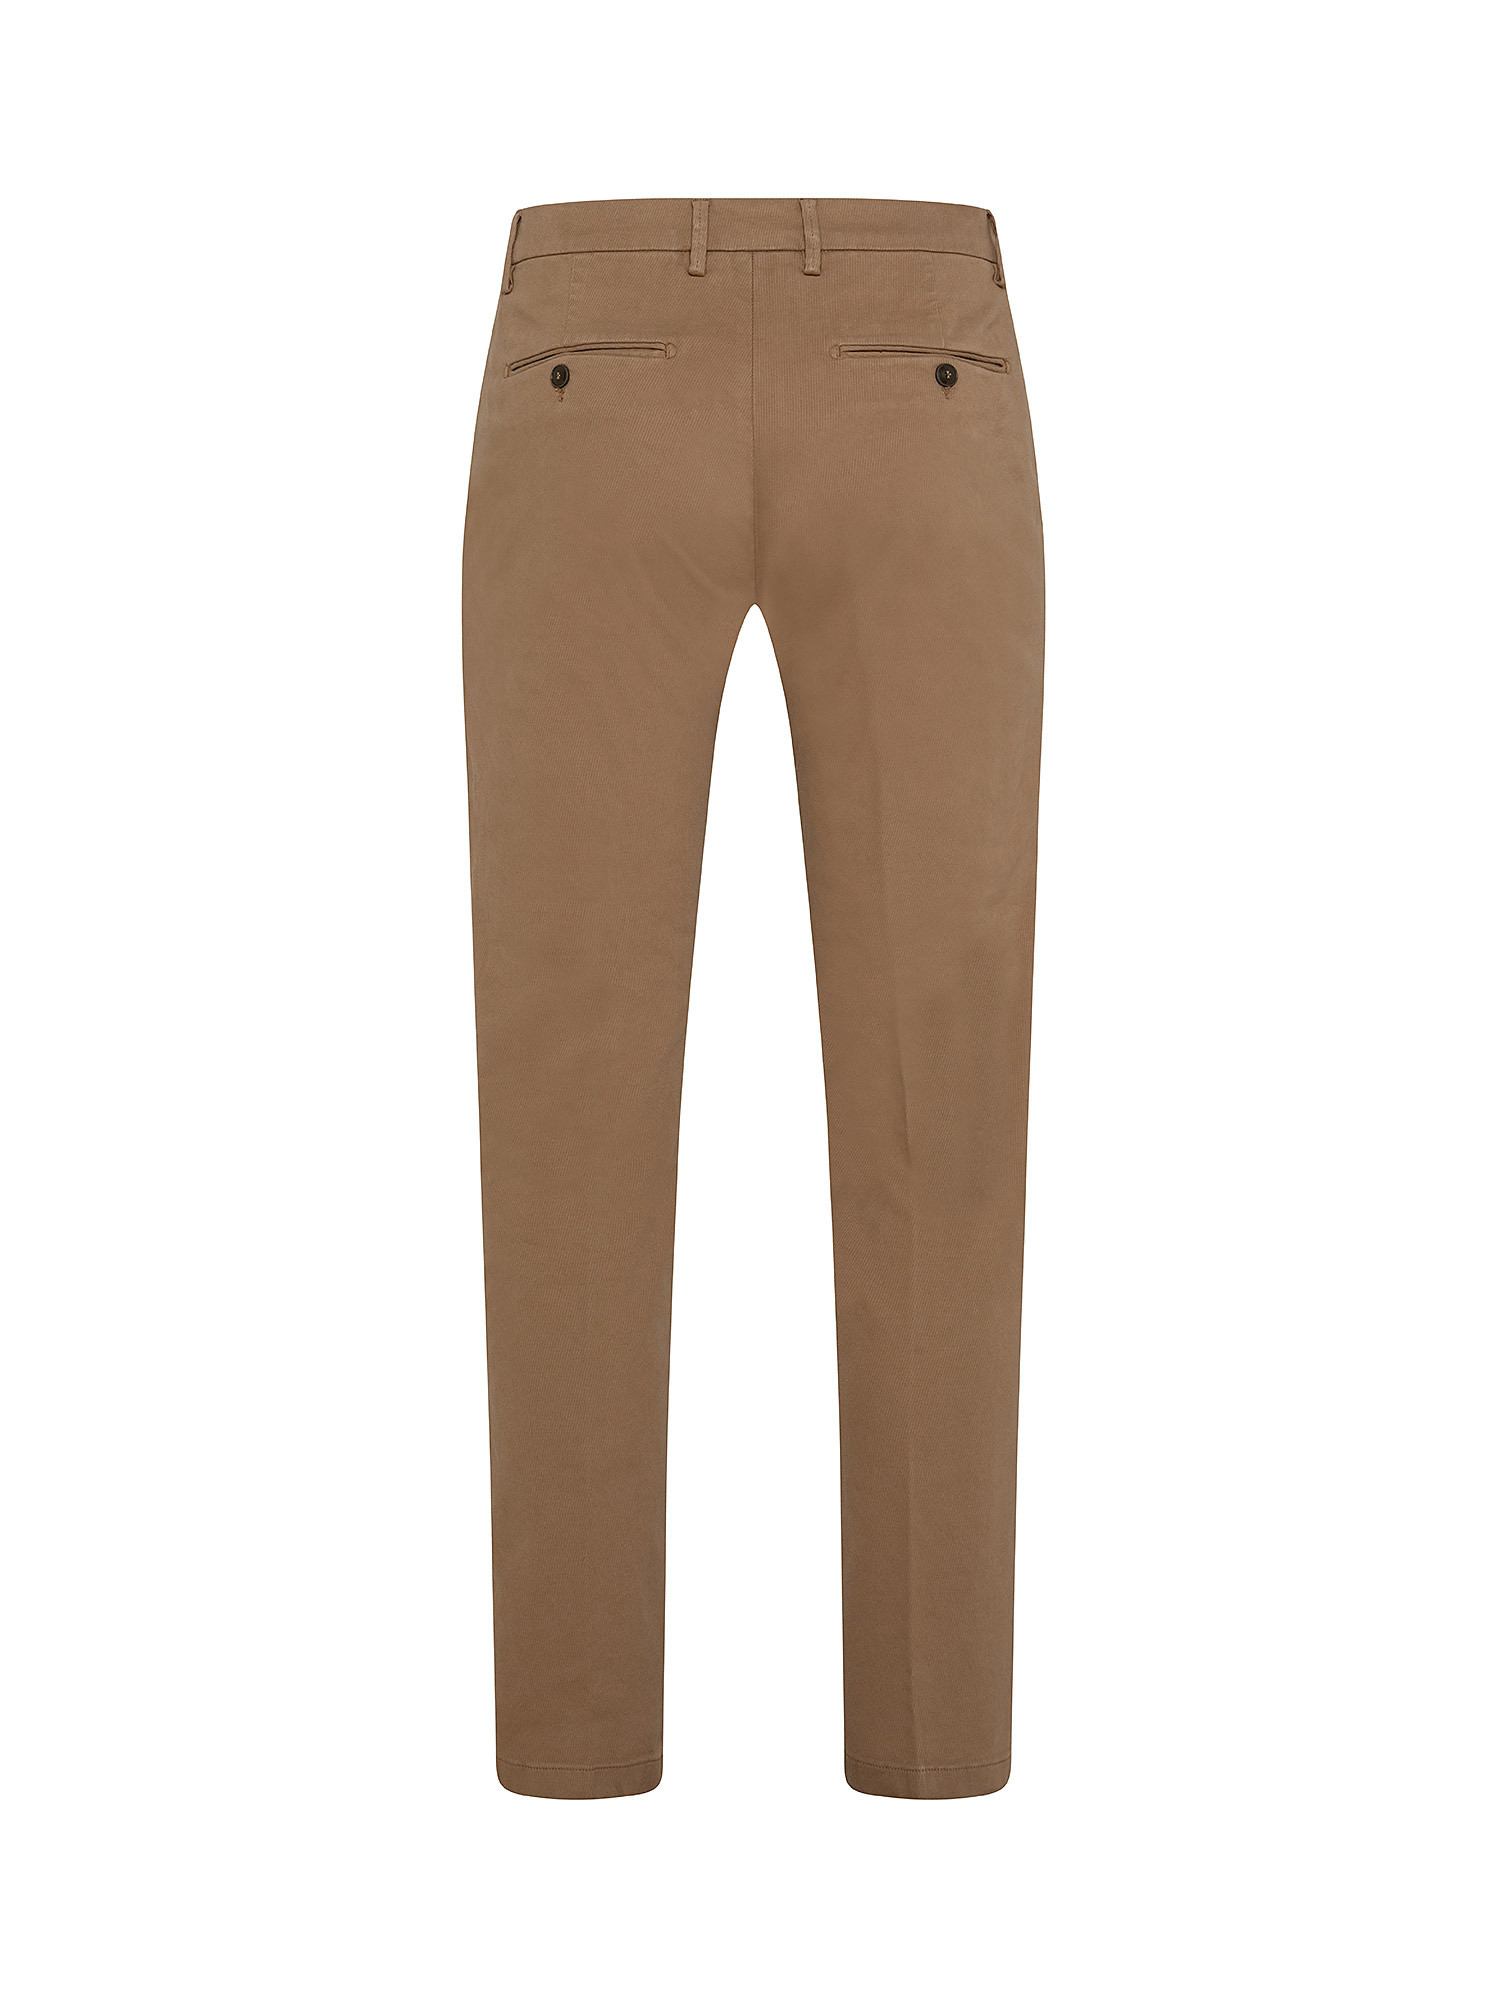 Pantaloni Chino, Beige, large image number 1